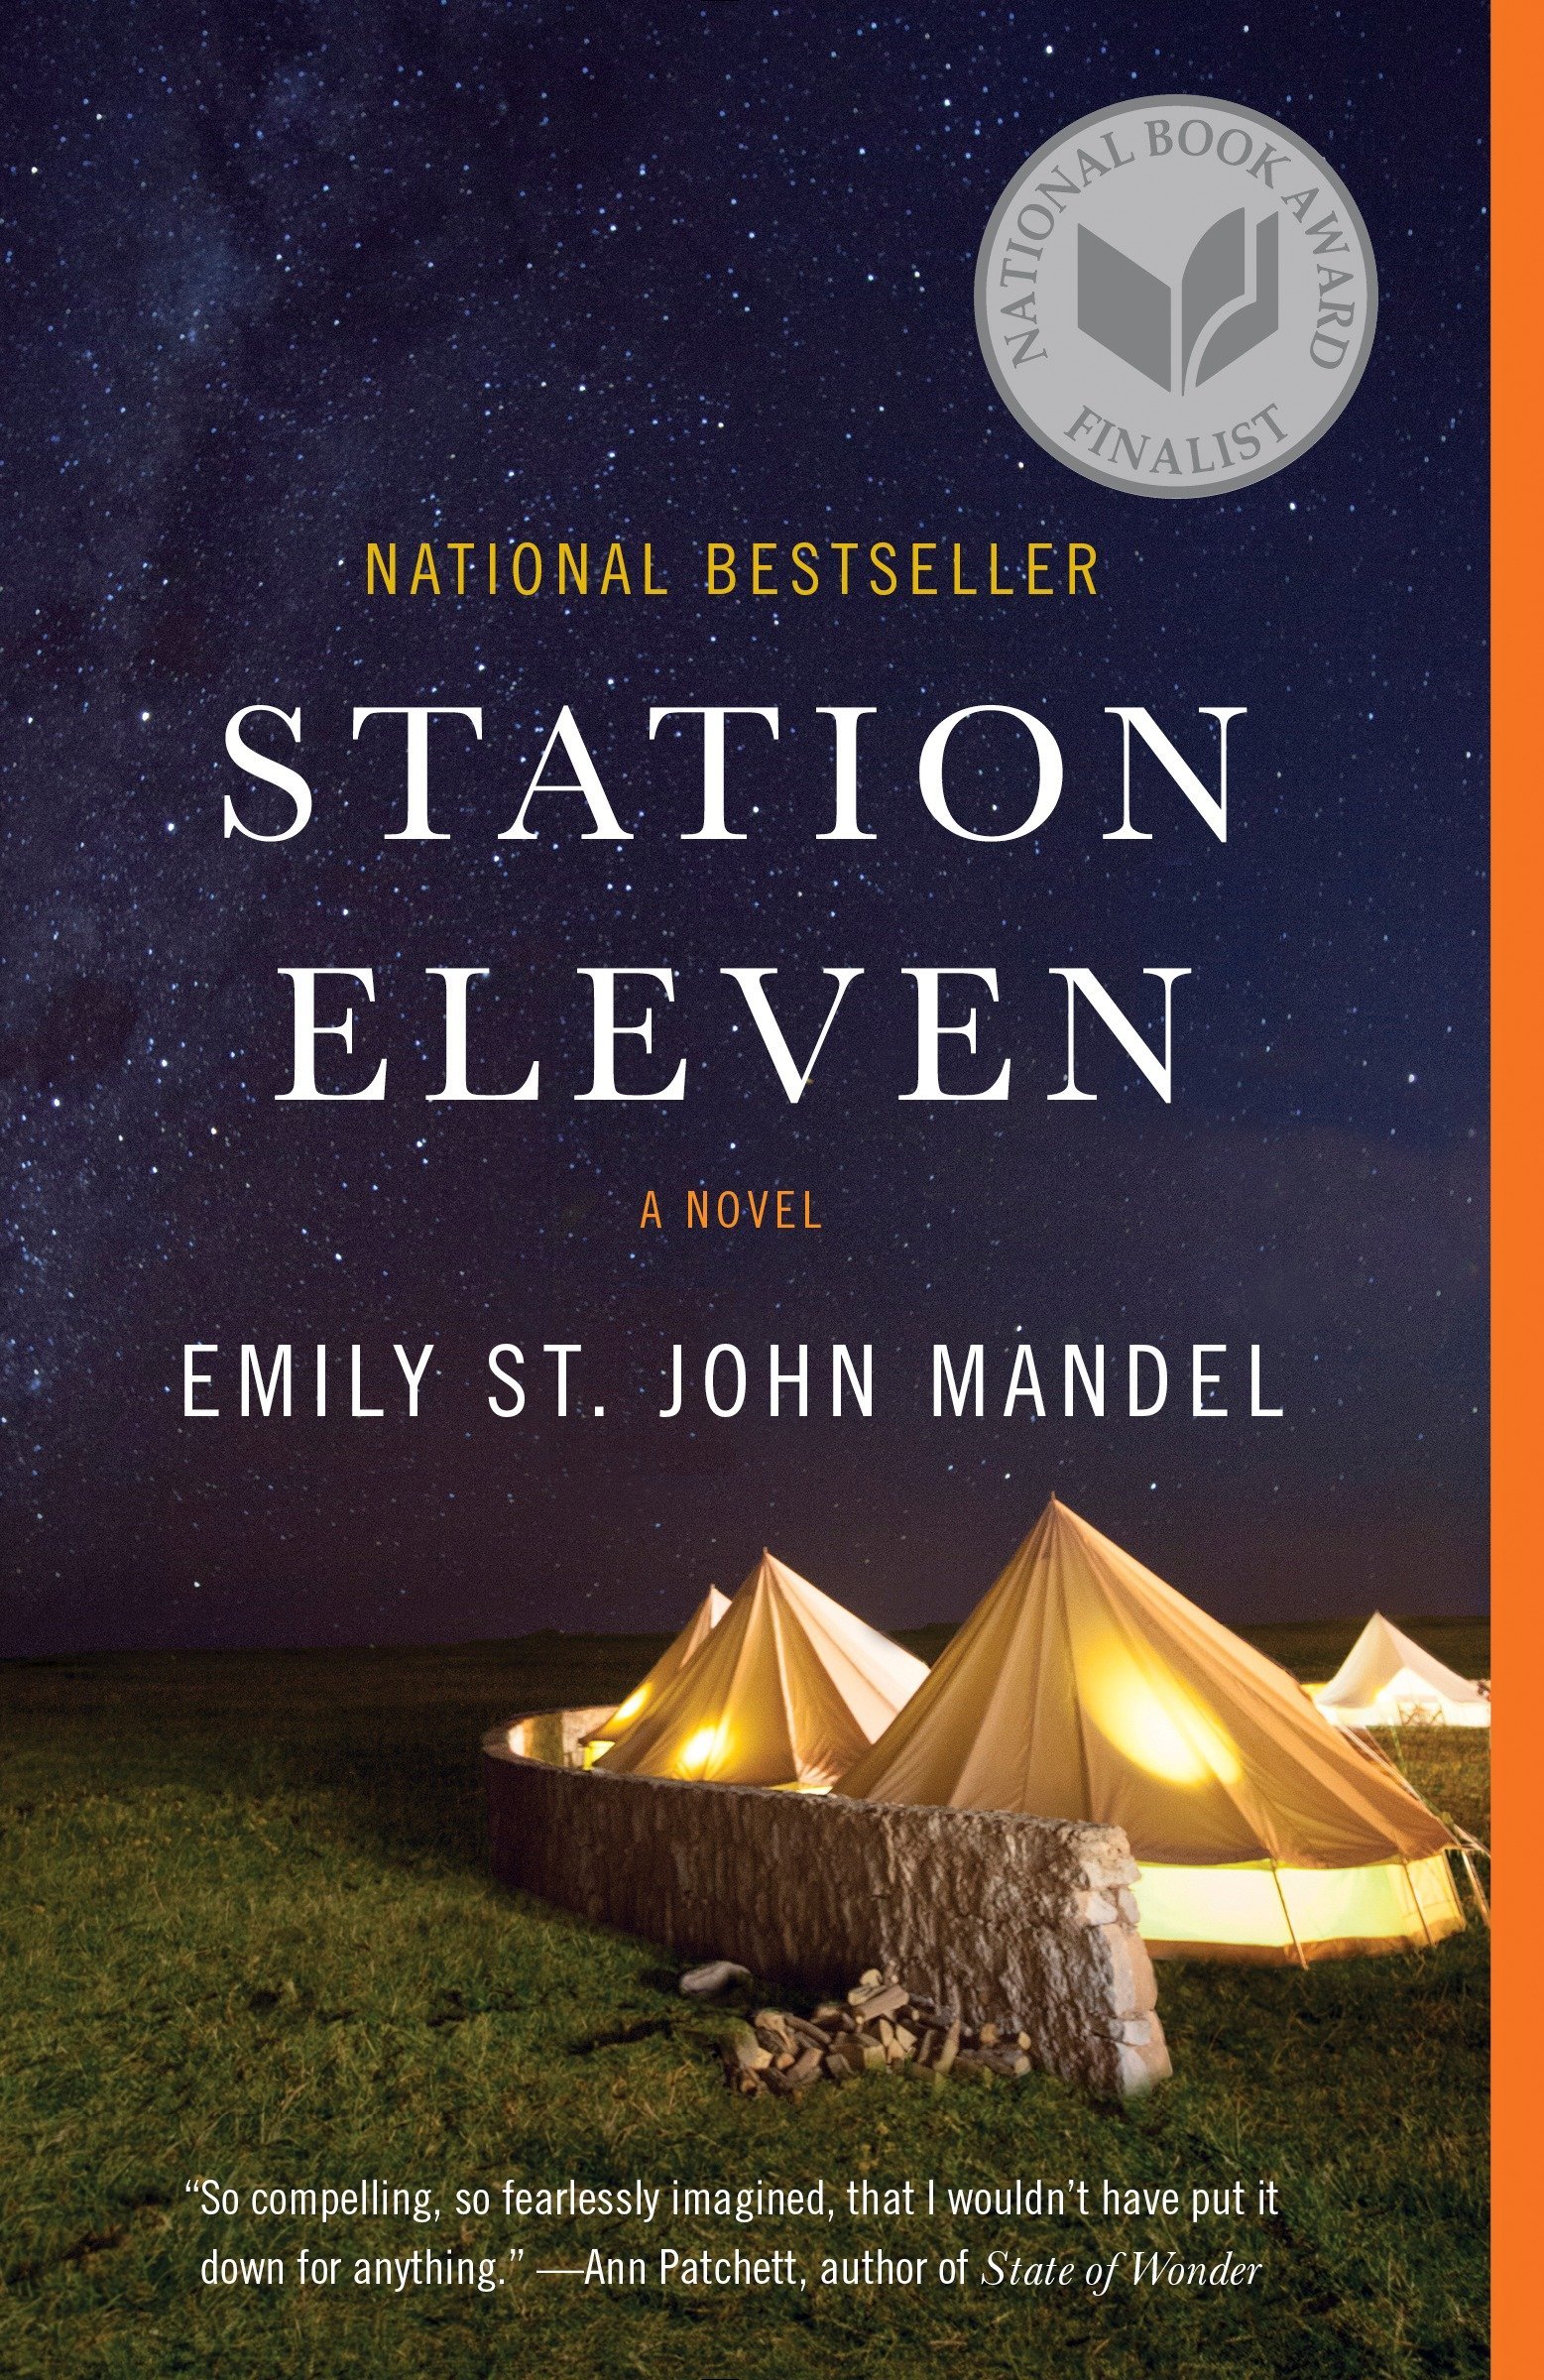 Cover of "Station Eleven" by Emily St. John Mandel